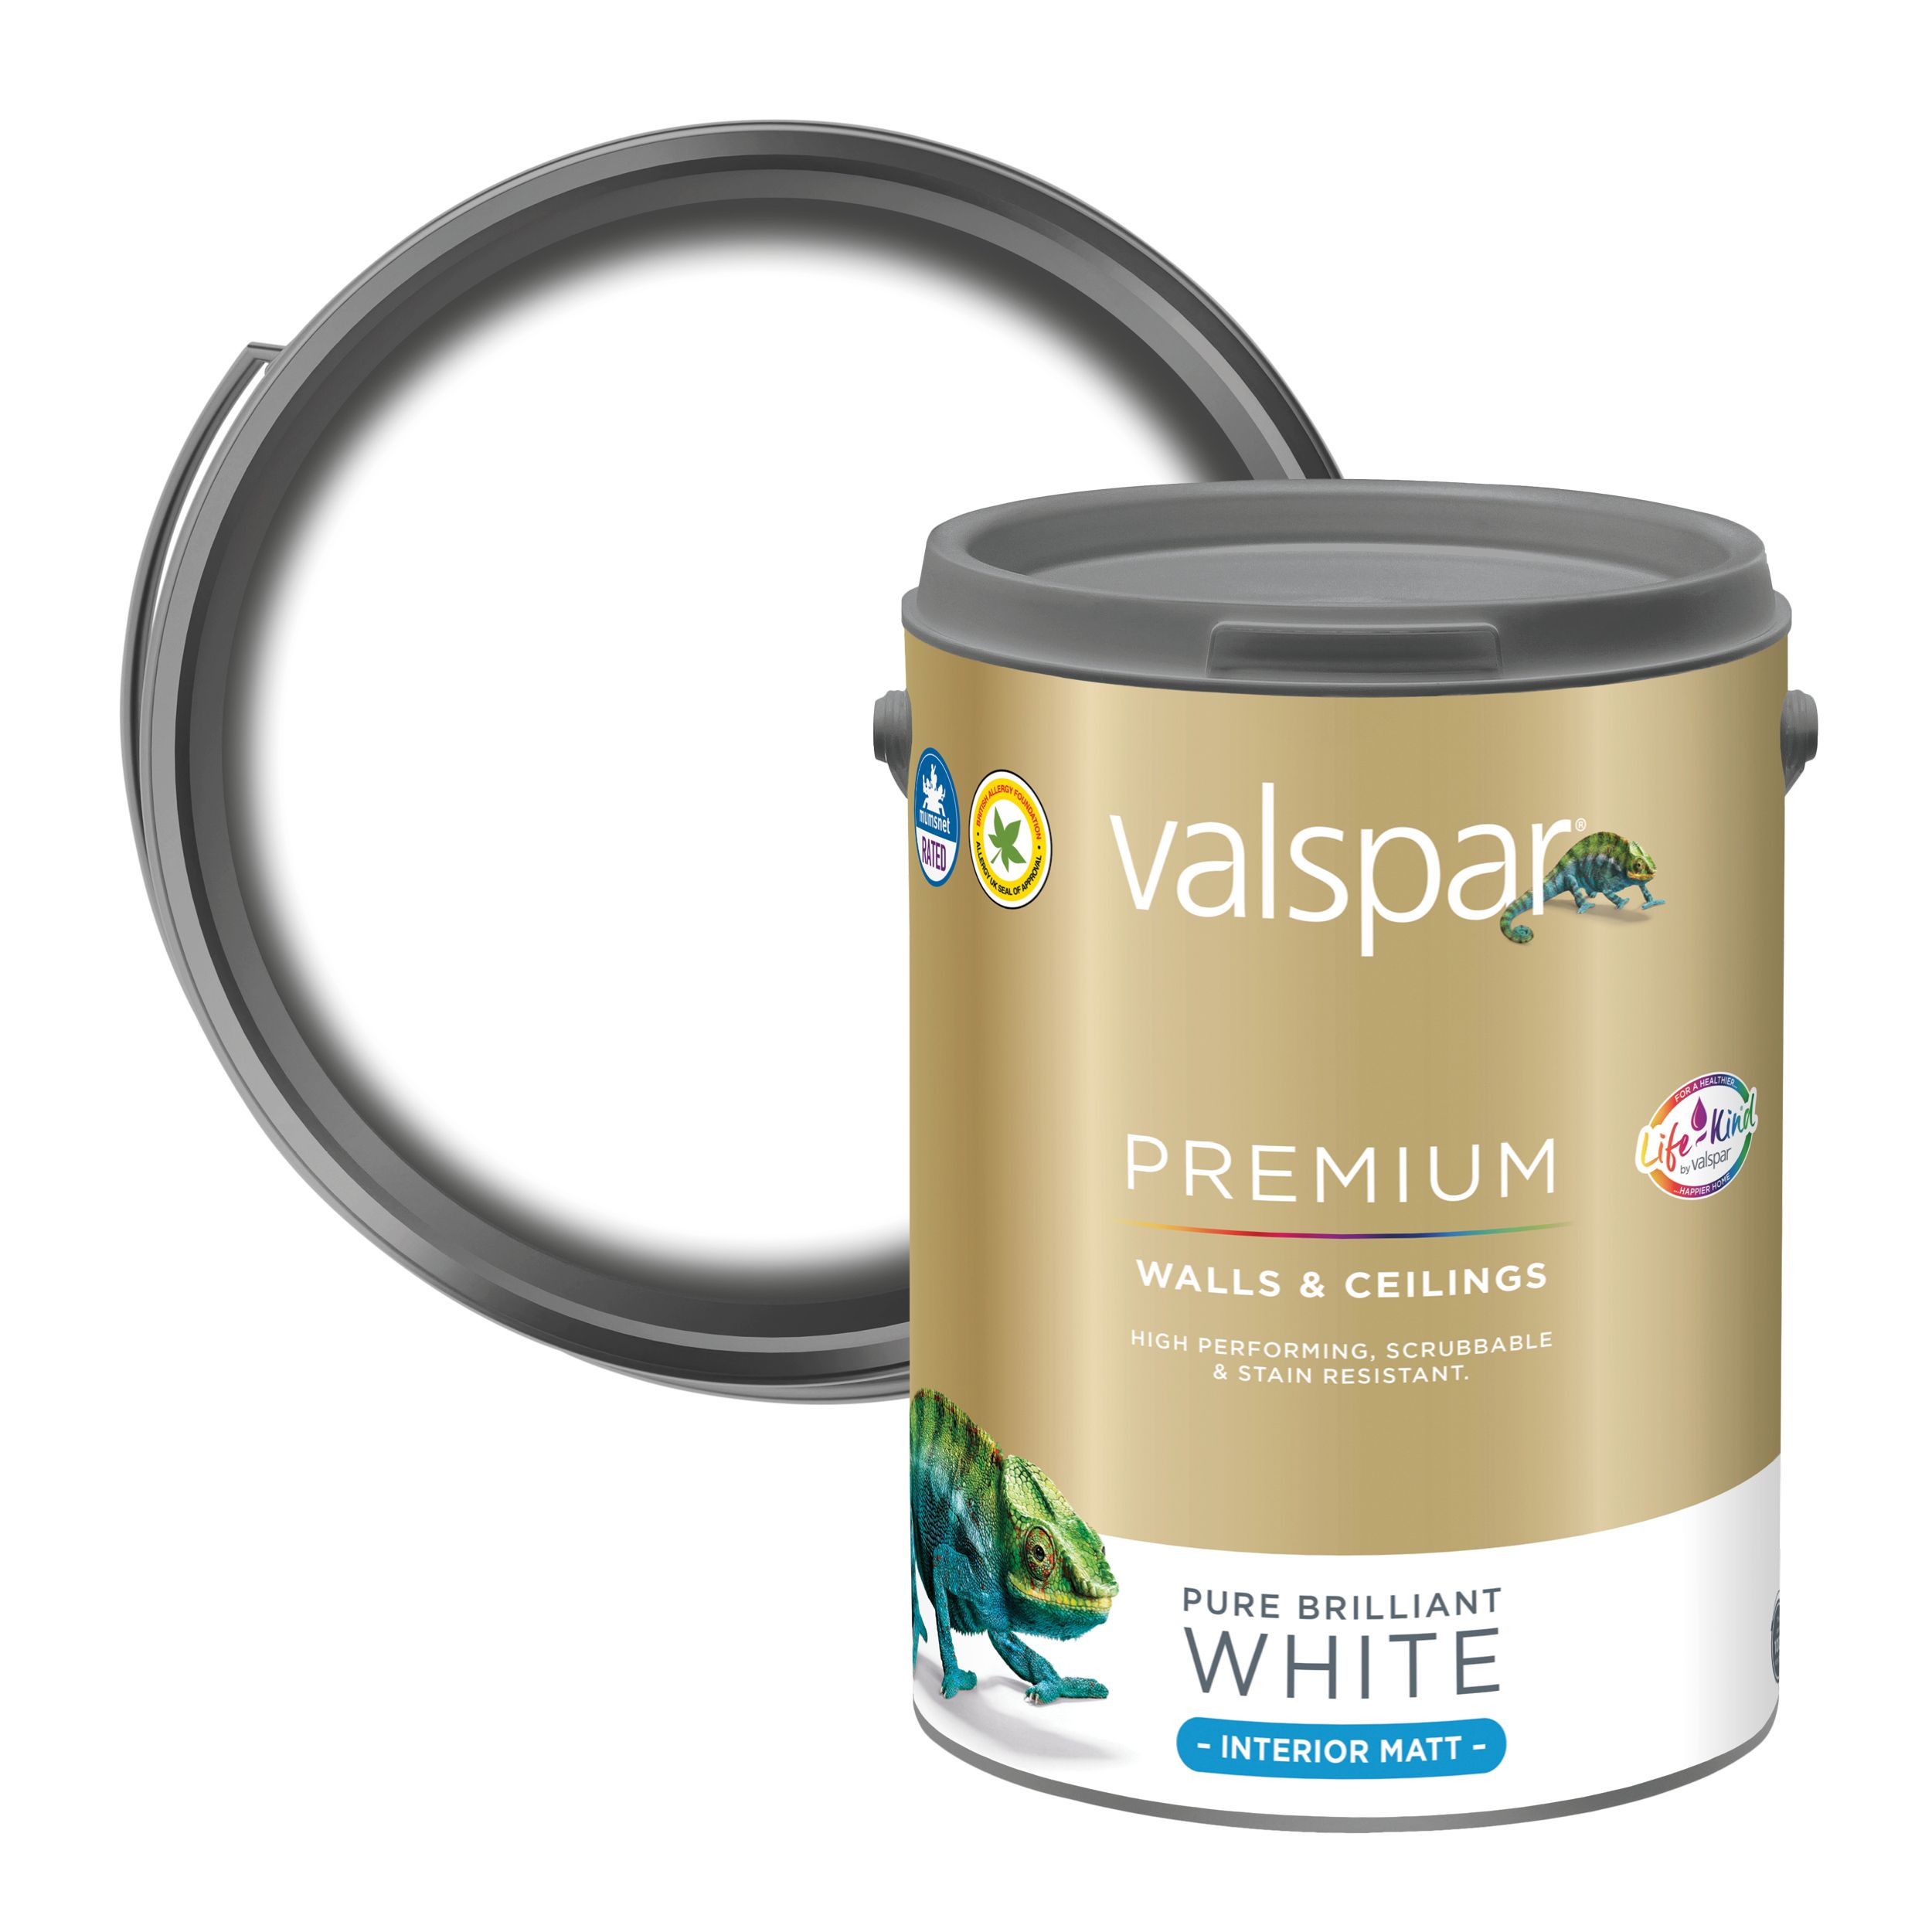 Valspar Premium Walls & Ceilings Pure Brilliant White Matt Emulsion paint, 5L